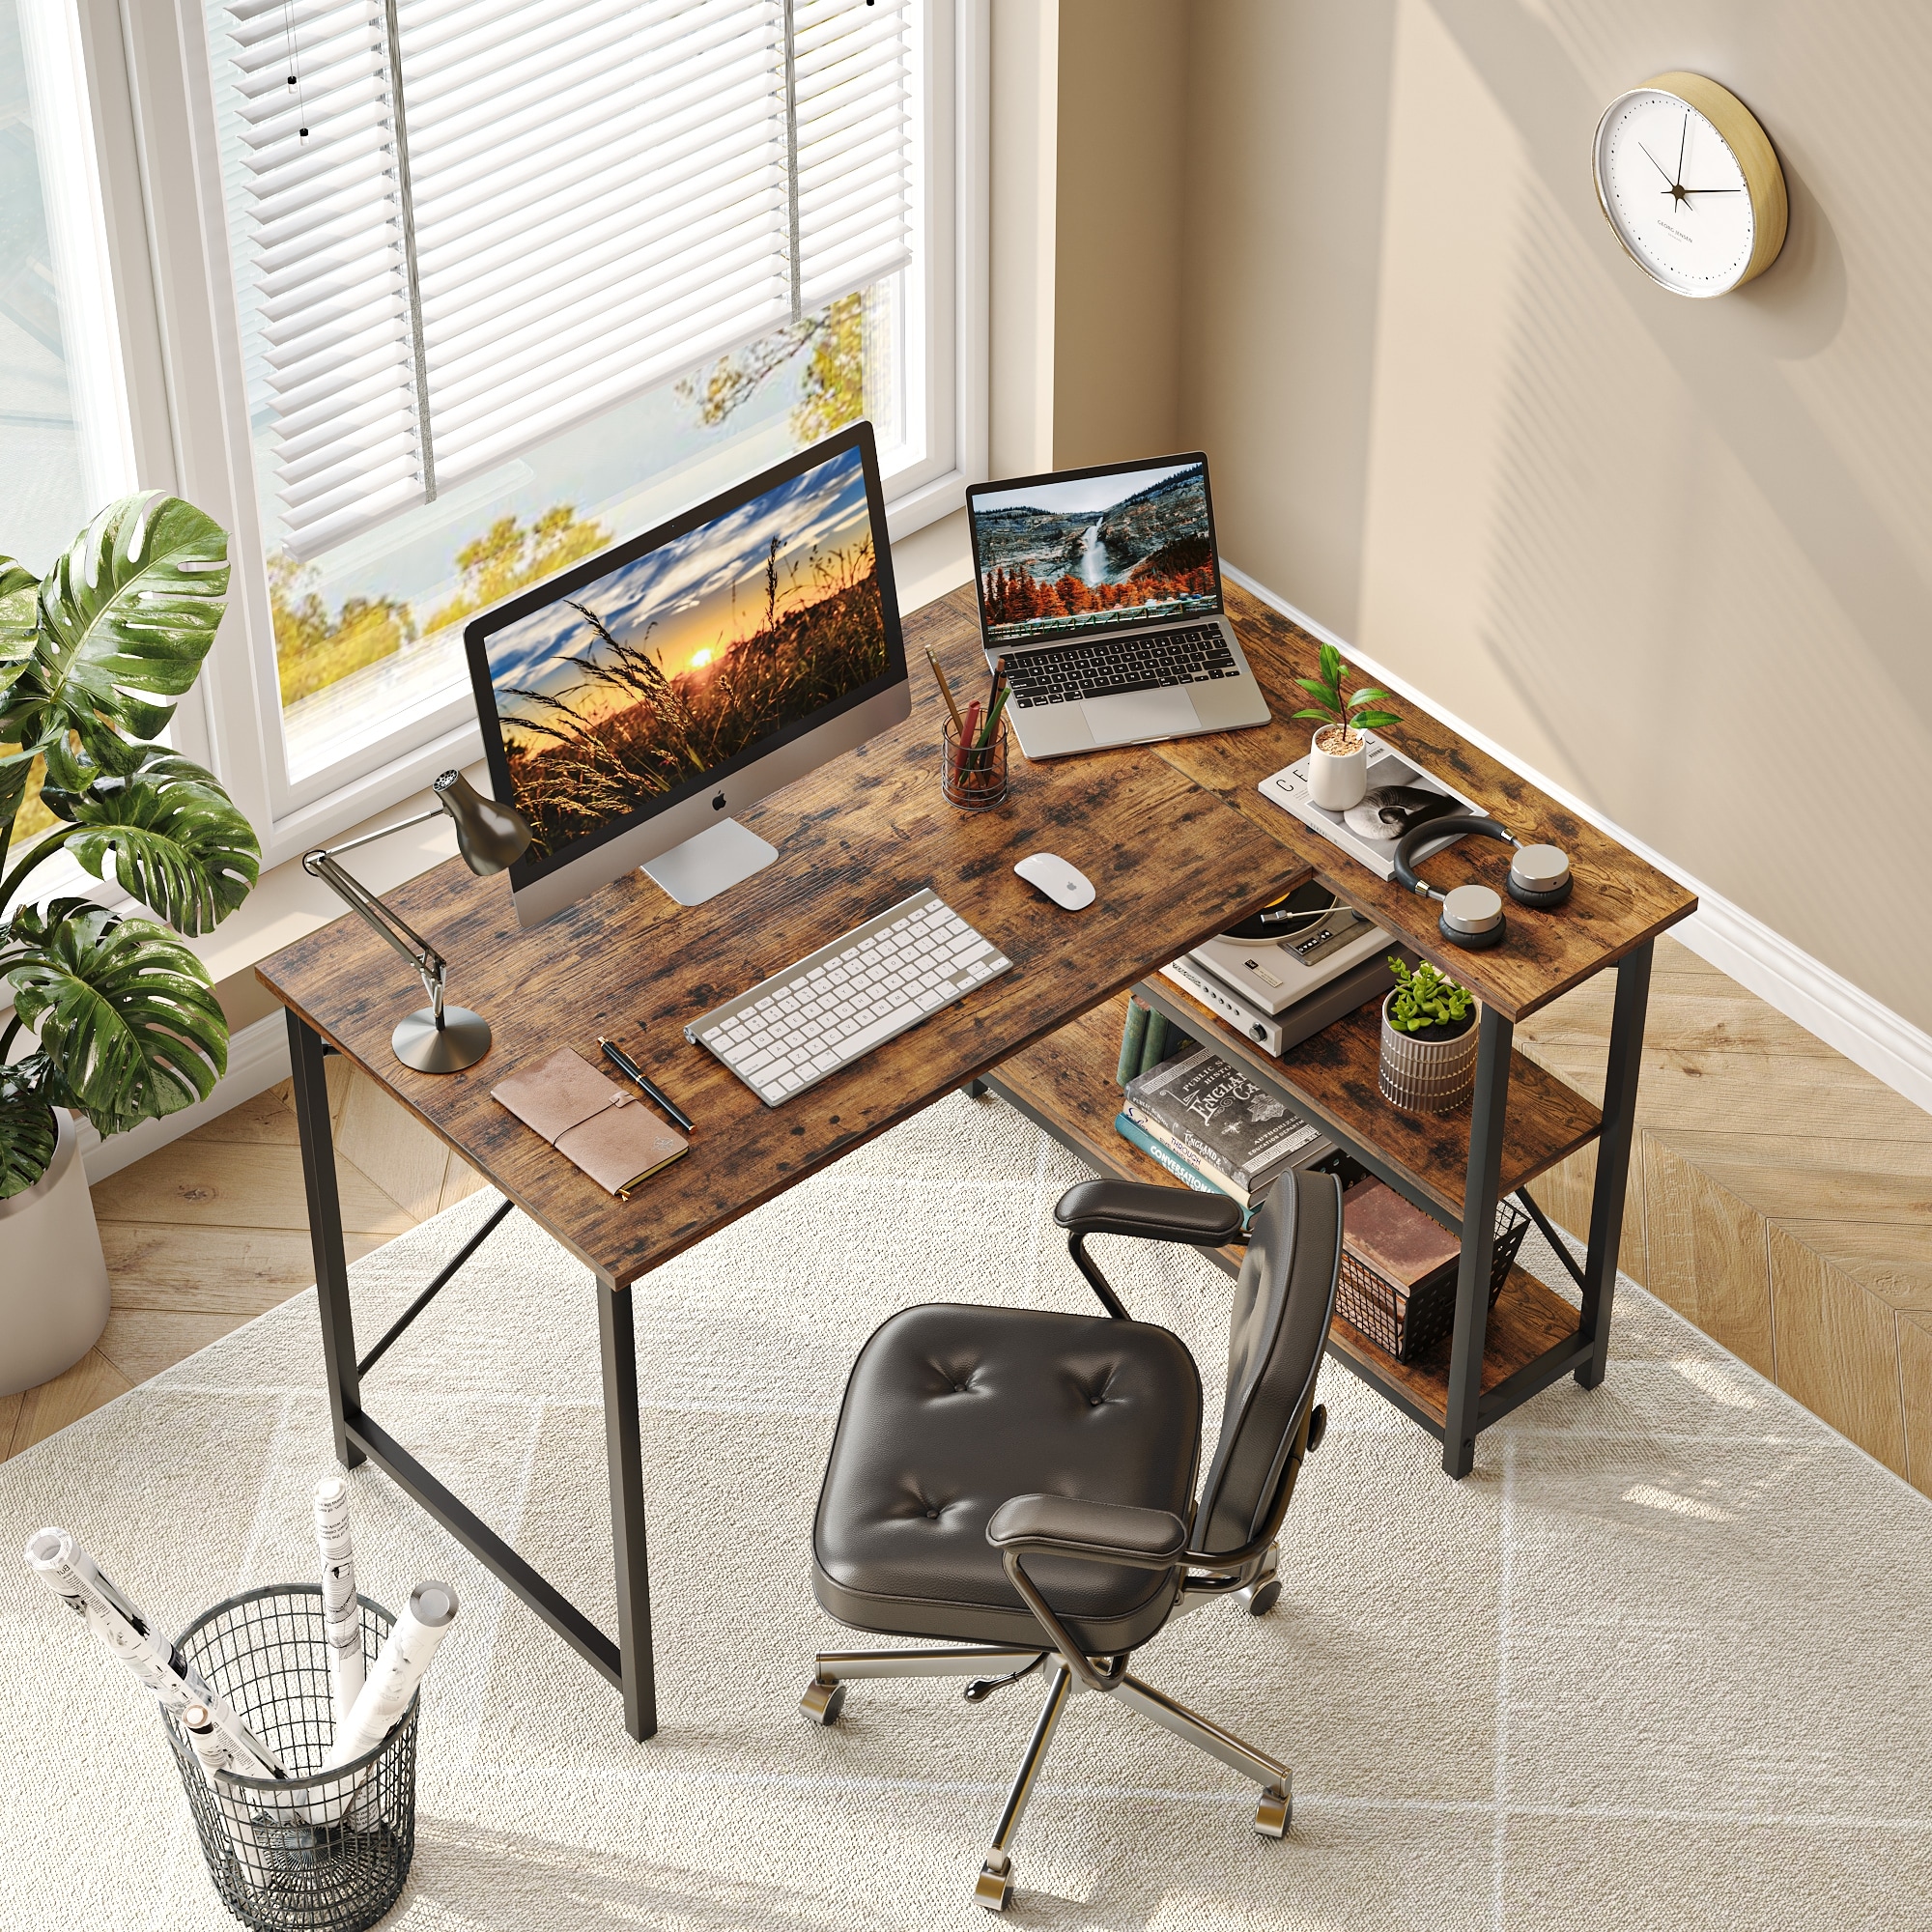 https://ak1.ostkcdn.com/images/products/is/images/direct/d32af9540c07cee5c30fa1e51025a85cd4f474e1/Small-L-Shaped-Desk-with-Storage-Shelves-Corner-Computer-Desk.jpg